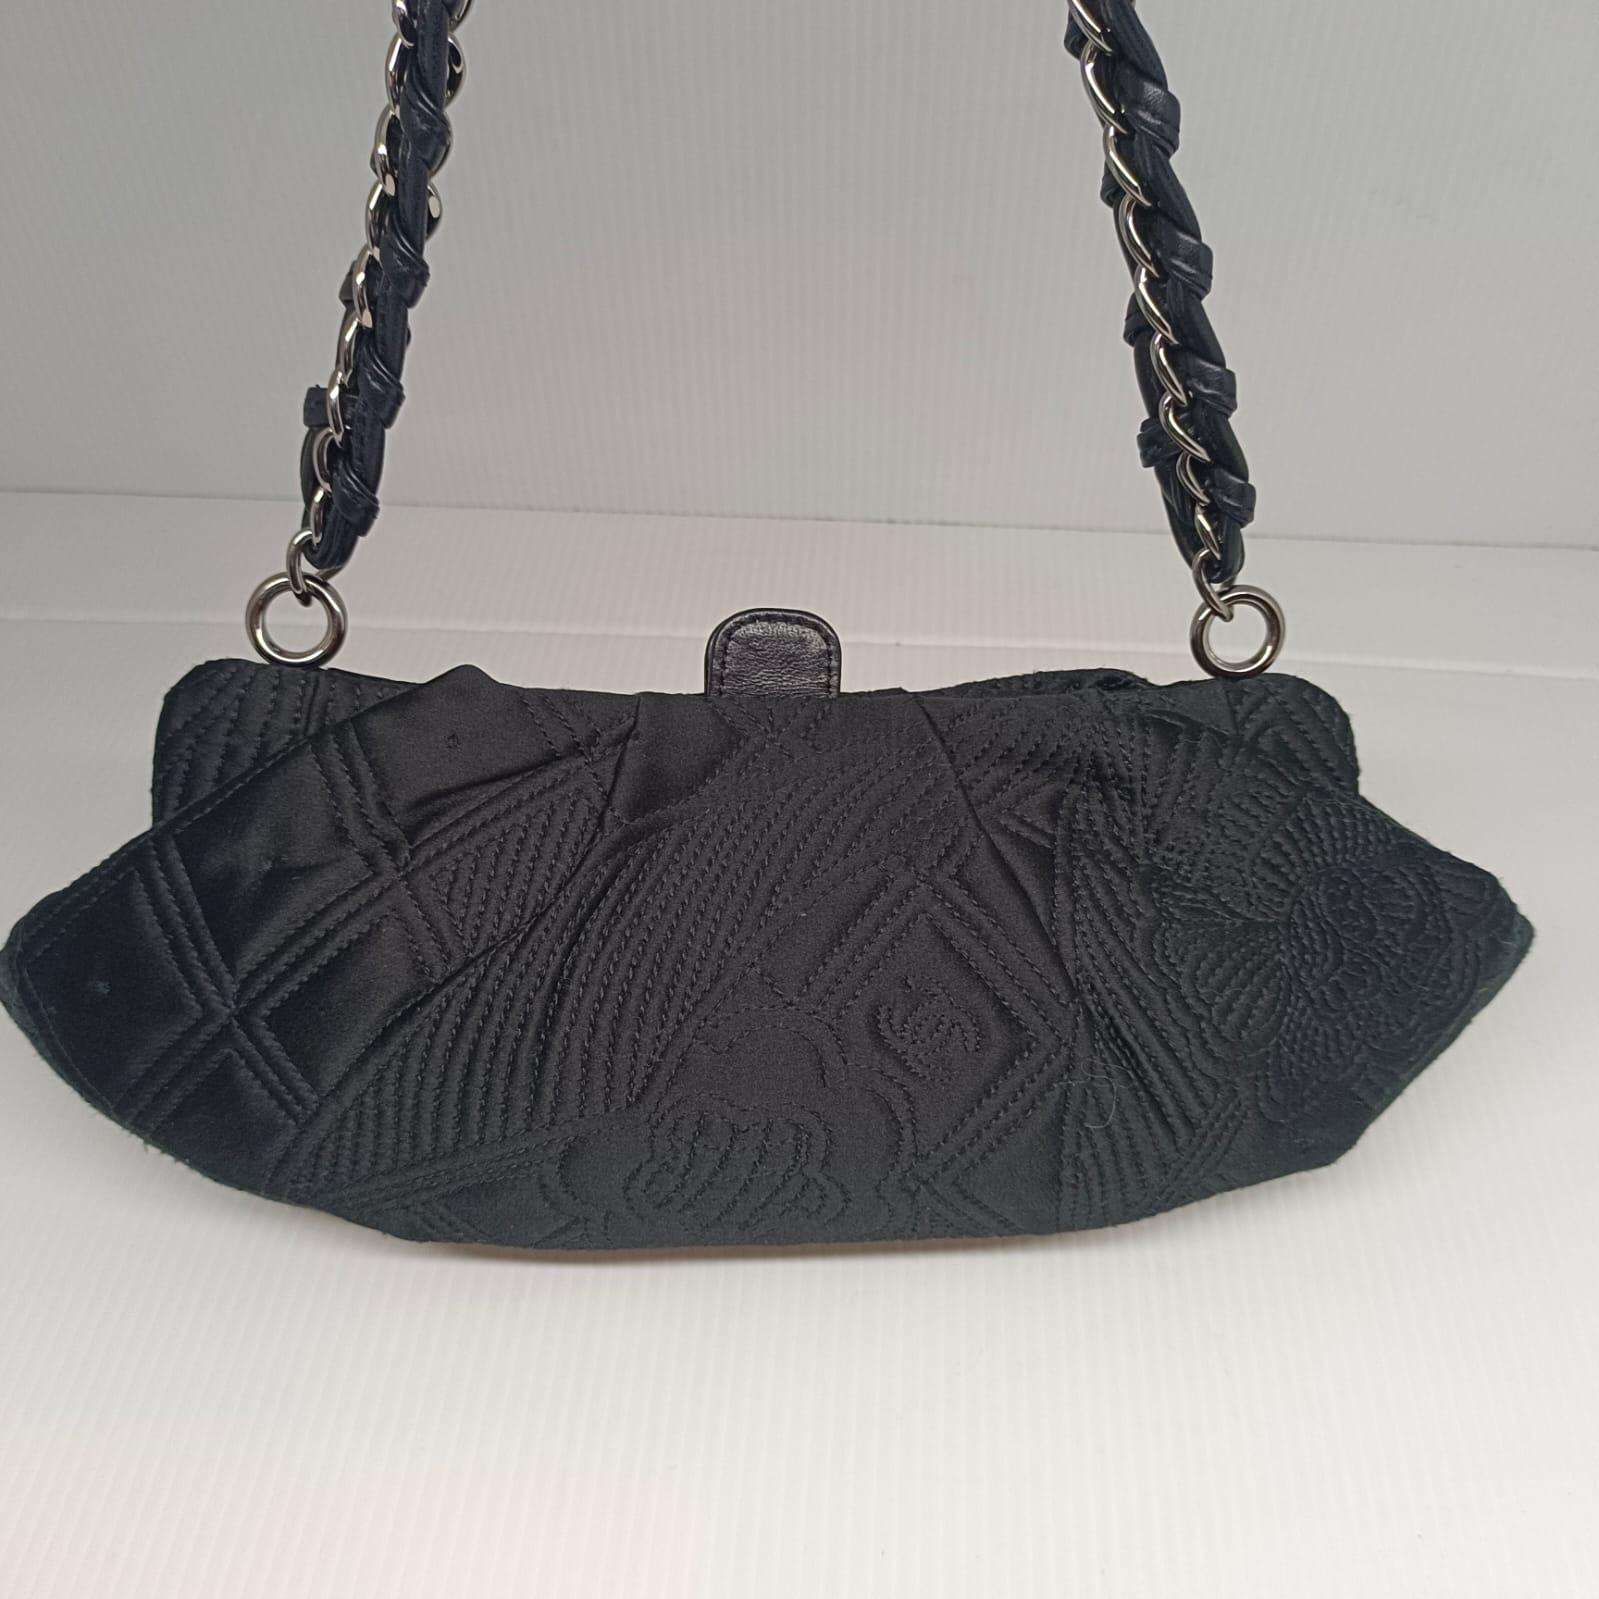 Chanel Black Satin Quilted Evening Bag In Good Condition For Sale In Jakarta, Daerah Khusus Ibukota Jakarta